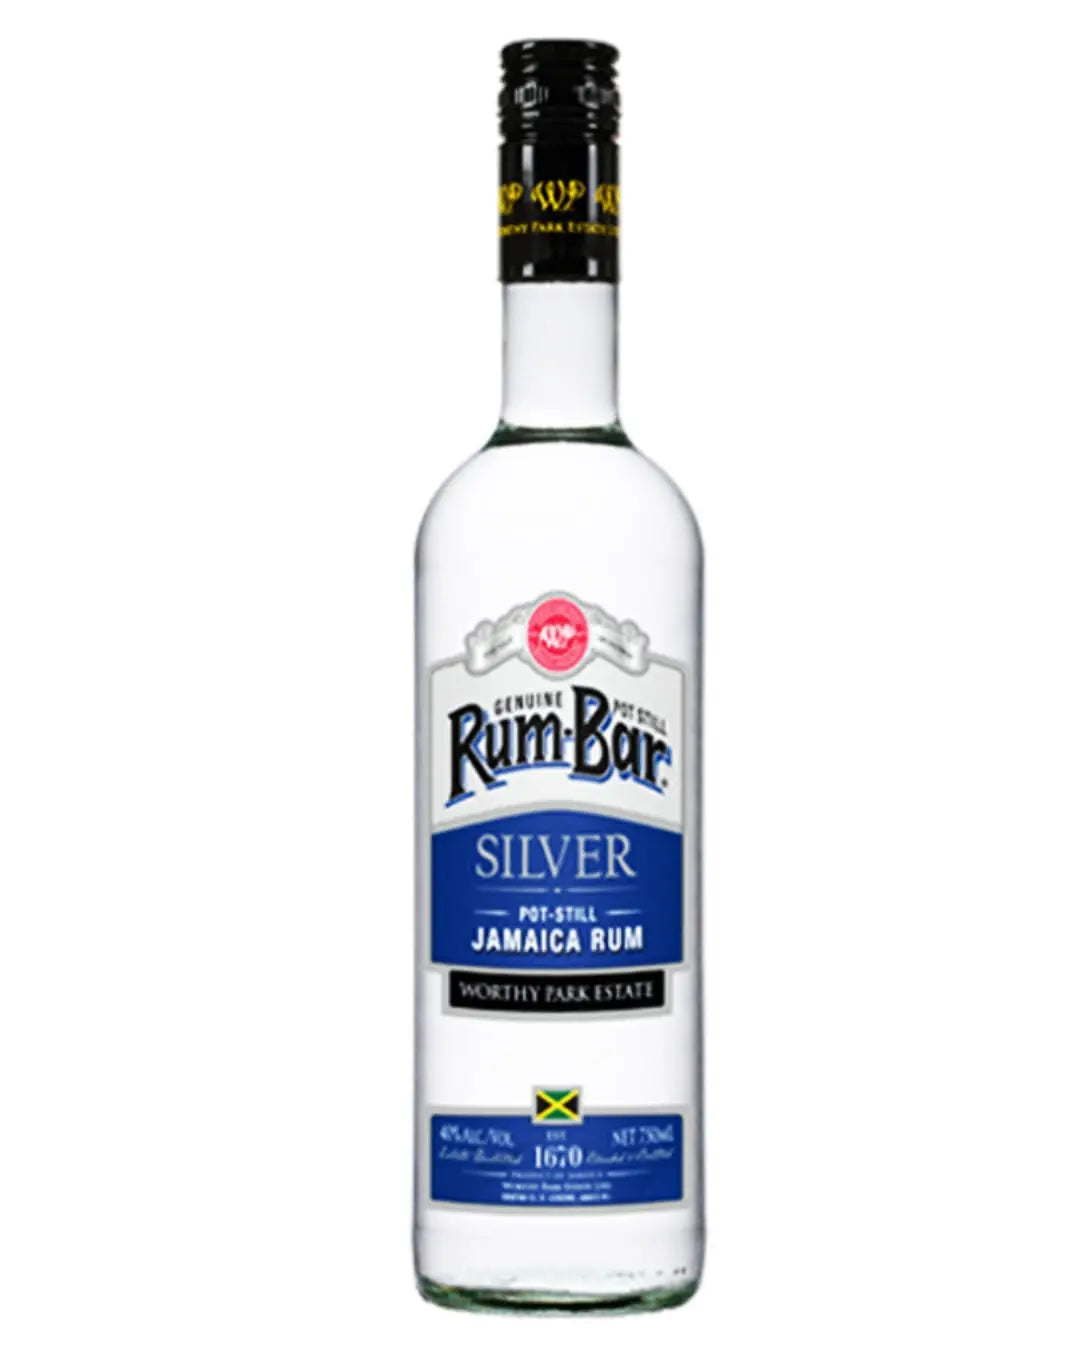 Worthy Park Rum-Bar Silver, 70 cl Rum